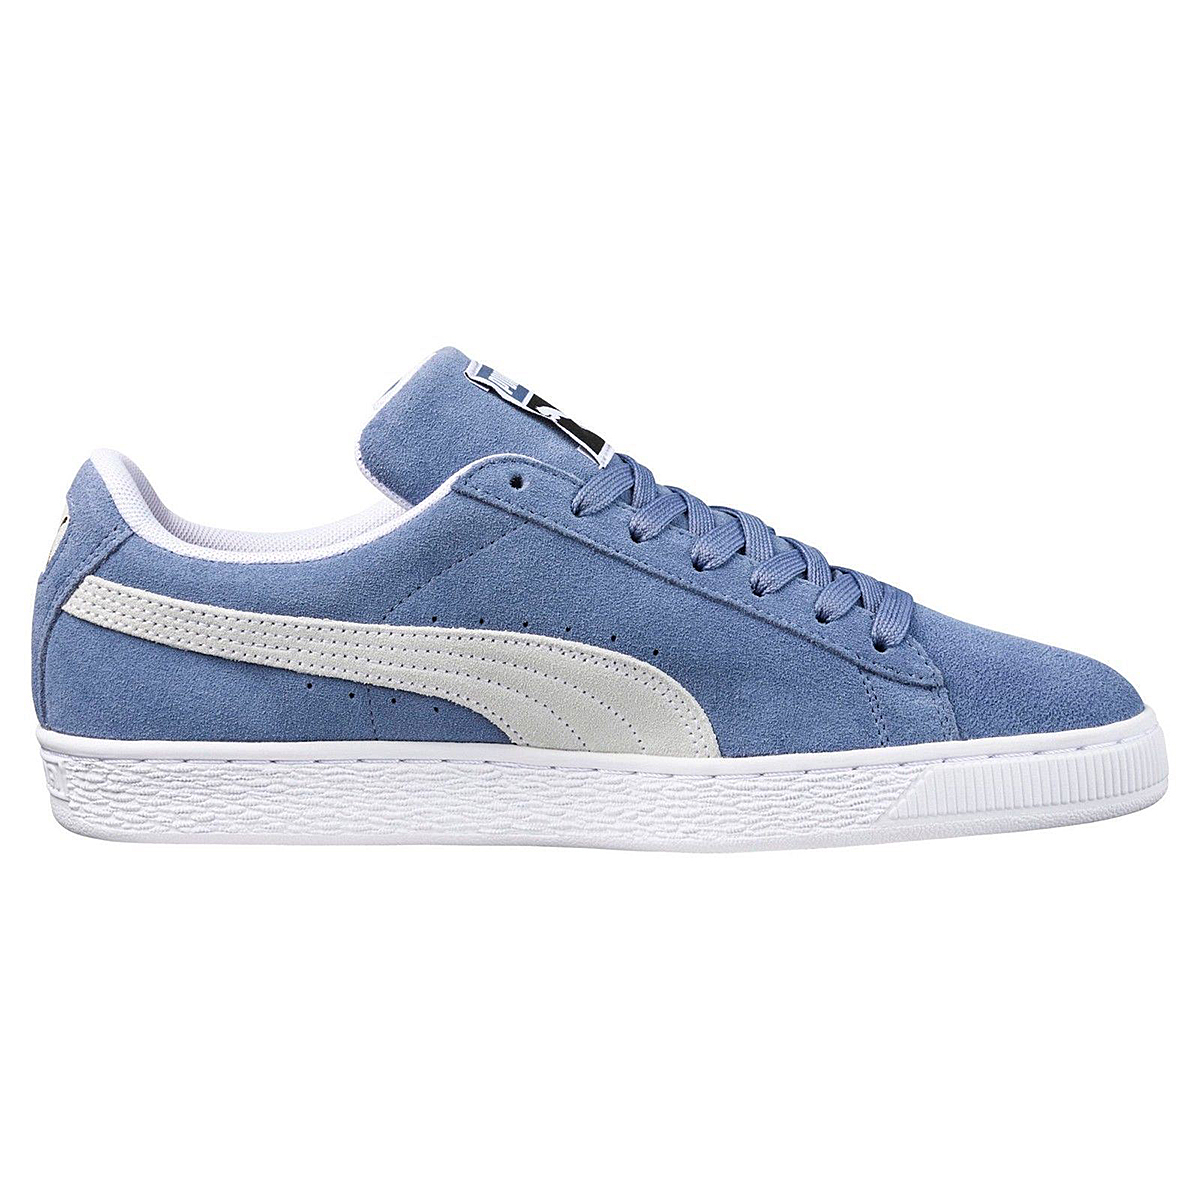 Puma Suede Classic Unisex Sneaker Low-Top blau 365347 03